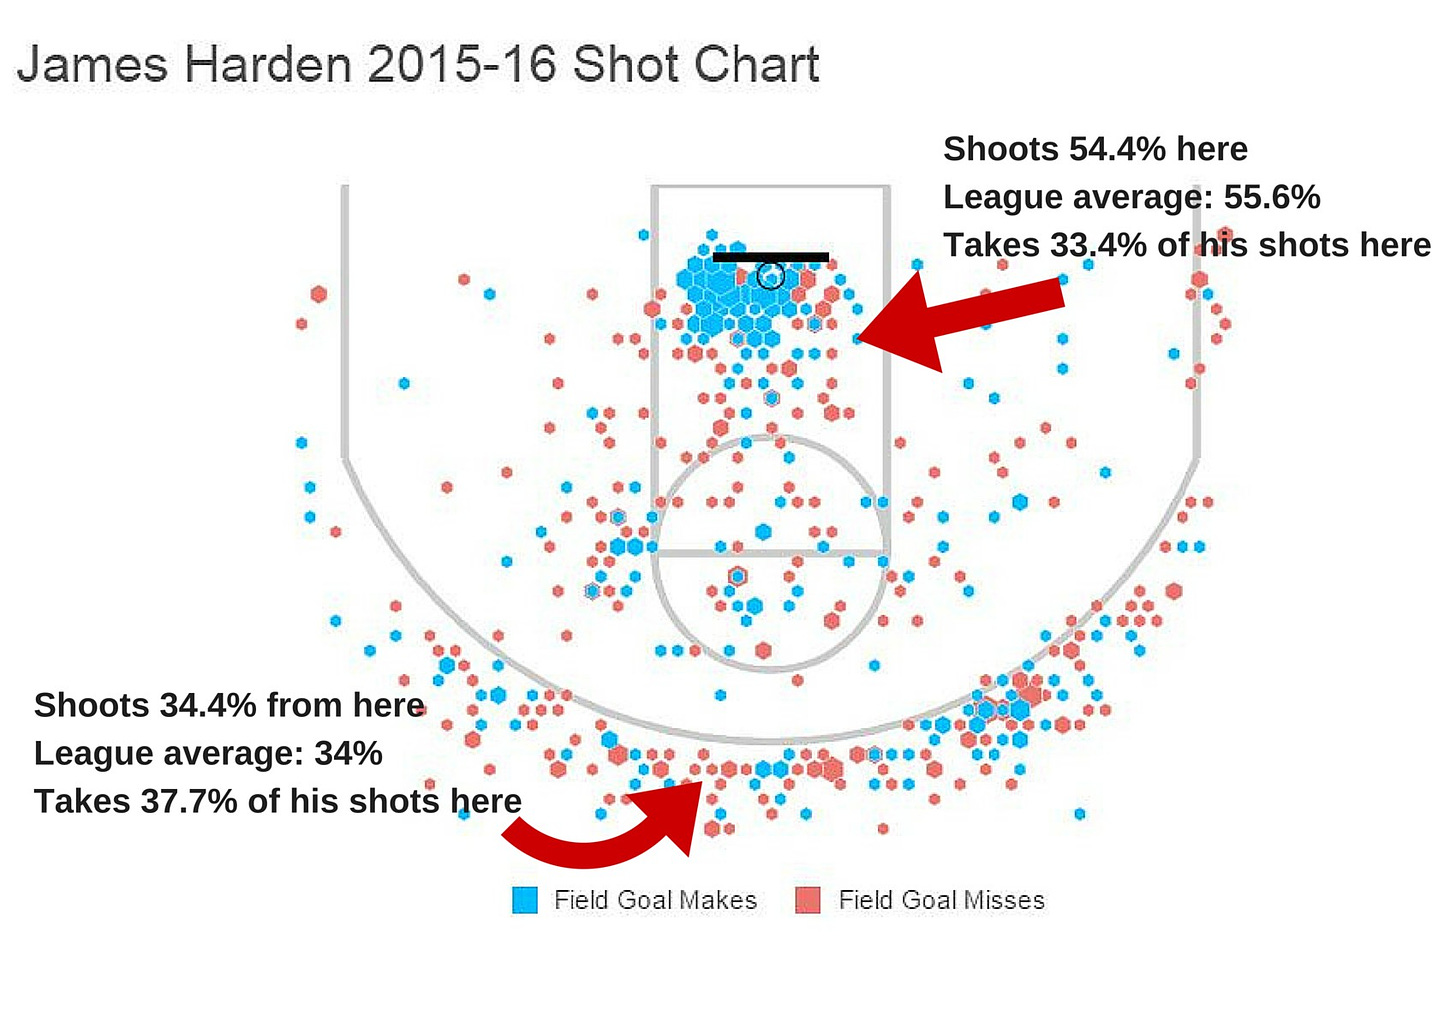 Harden shot chart